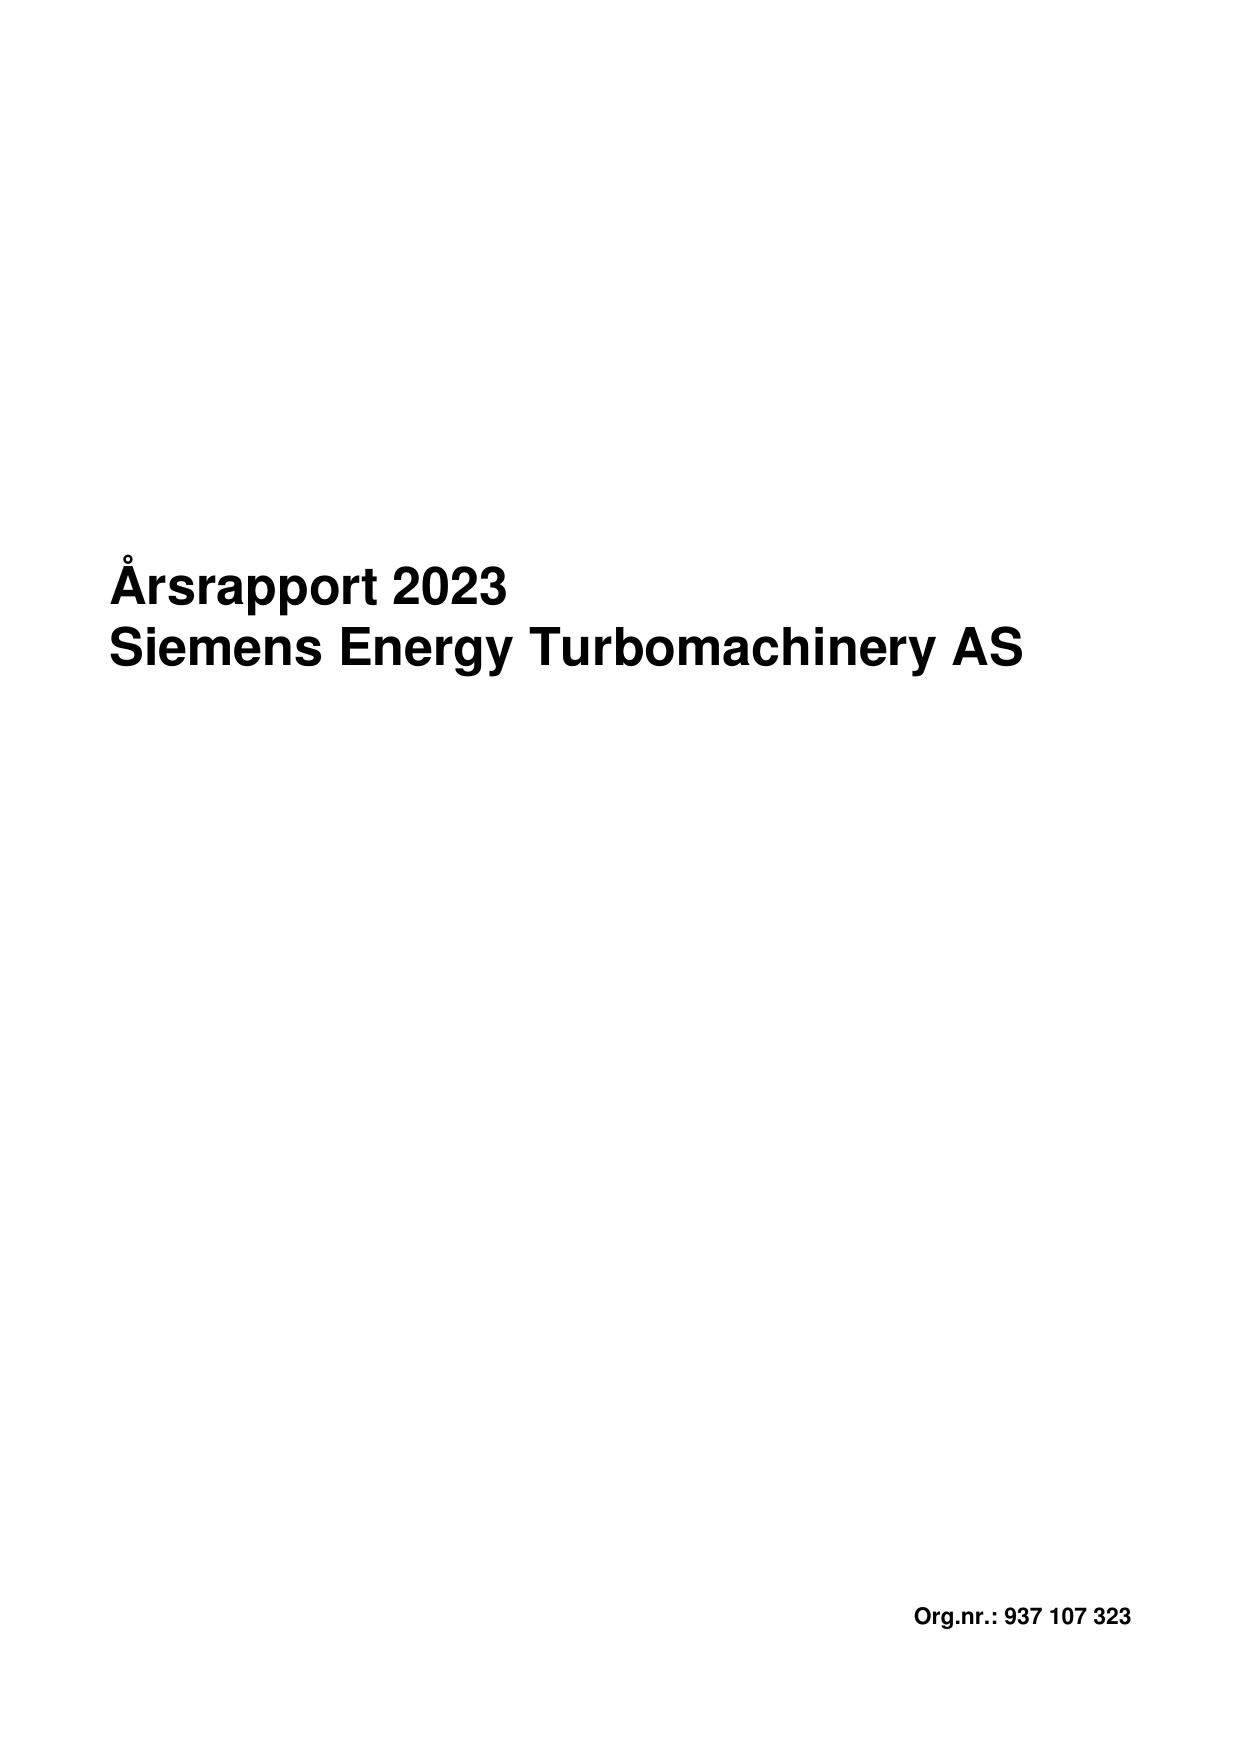 SIEMENS-ENERGY 2022 Annual Report